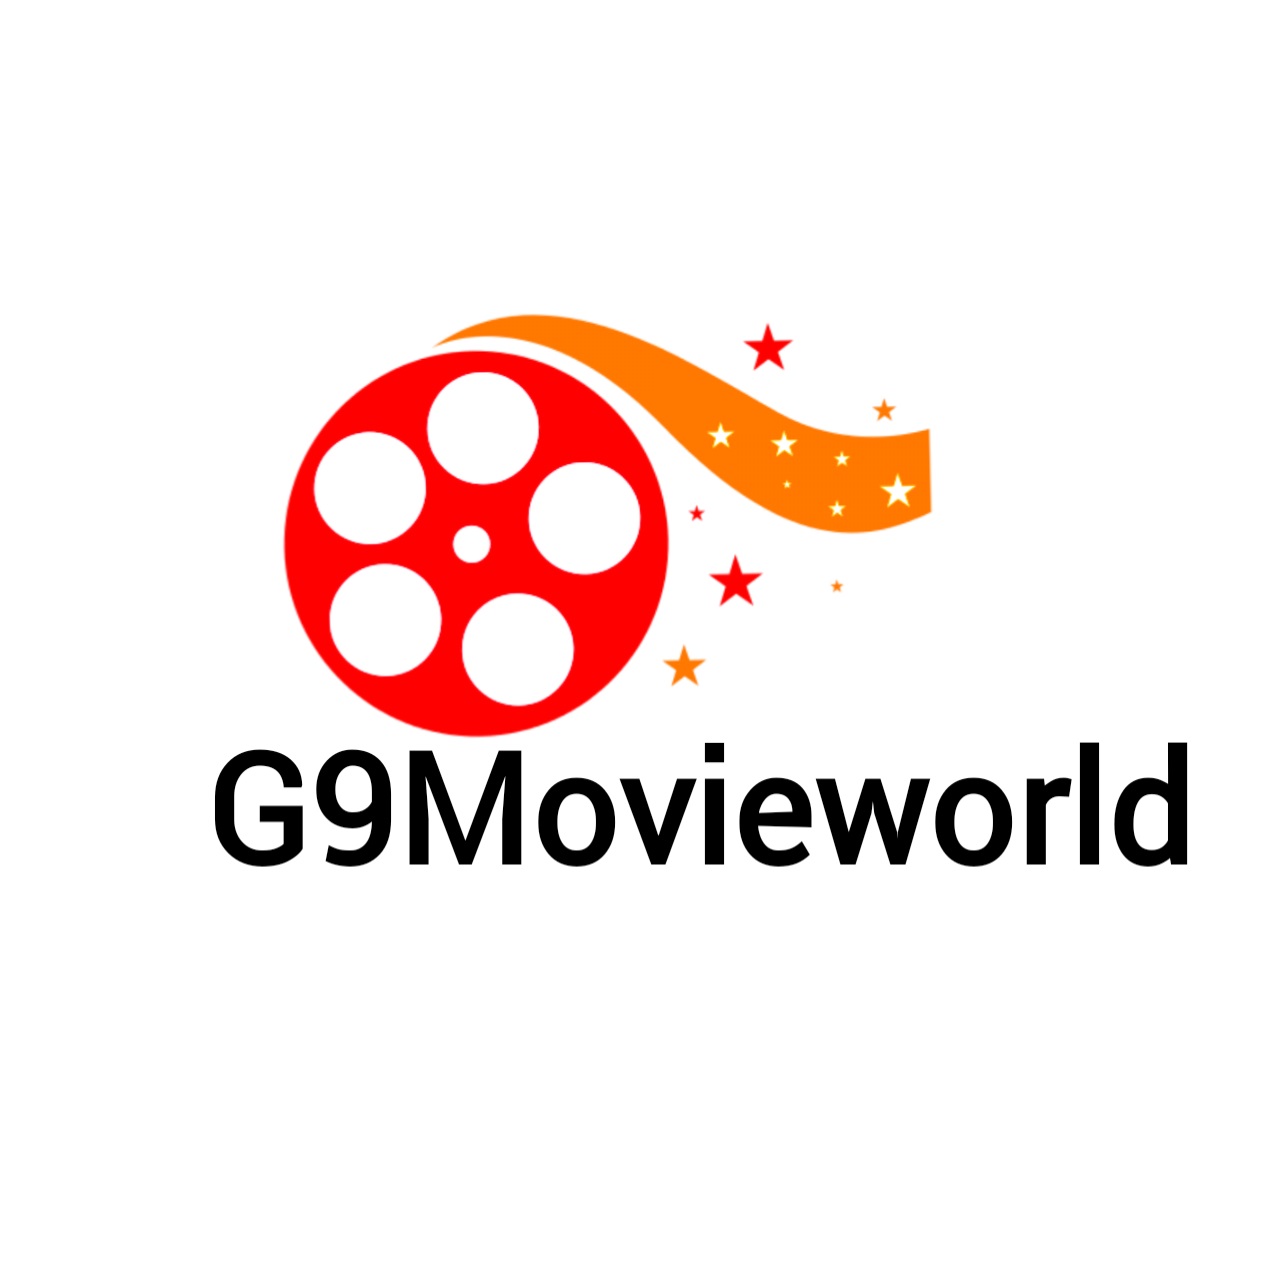 G9Movieworld